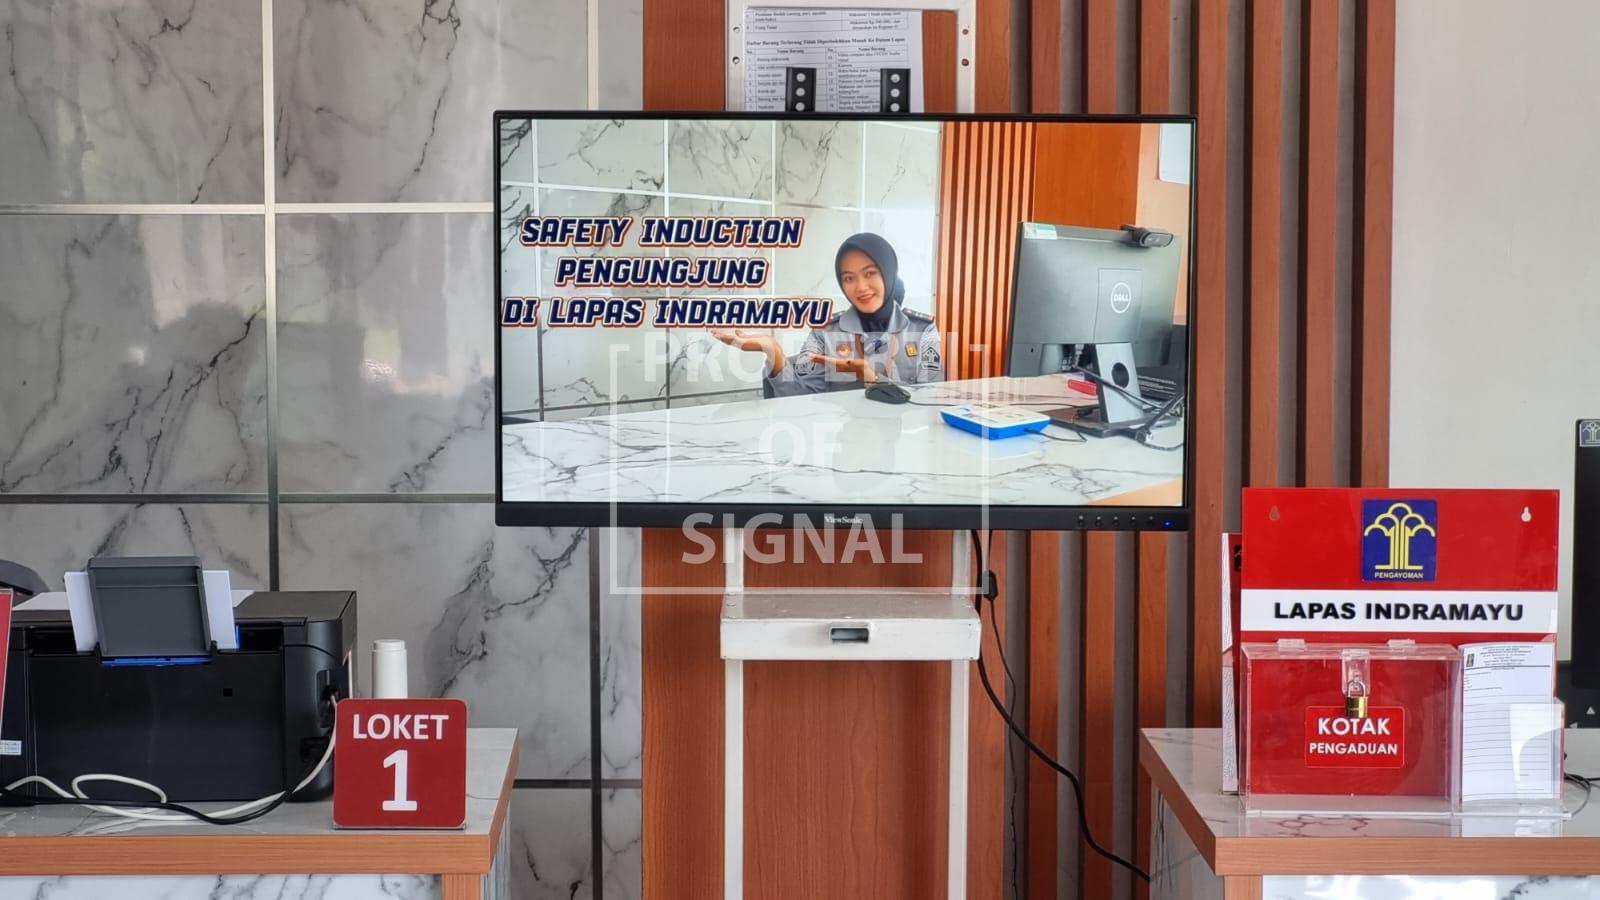 Lapas Indramayu Beri Edukasi Keselamatan & Keamanan Bagi Pengunjung Melalui Video Safety Induction